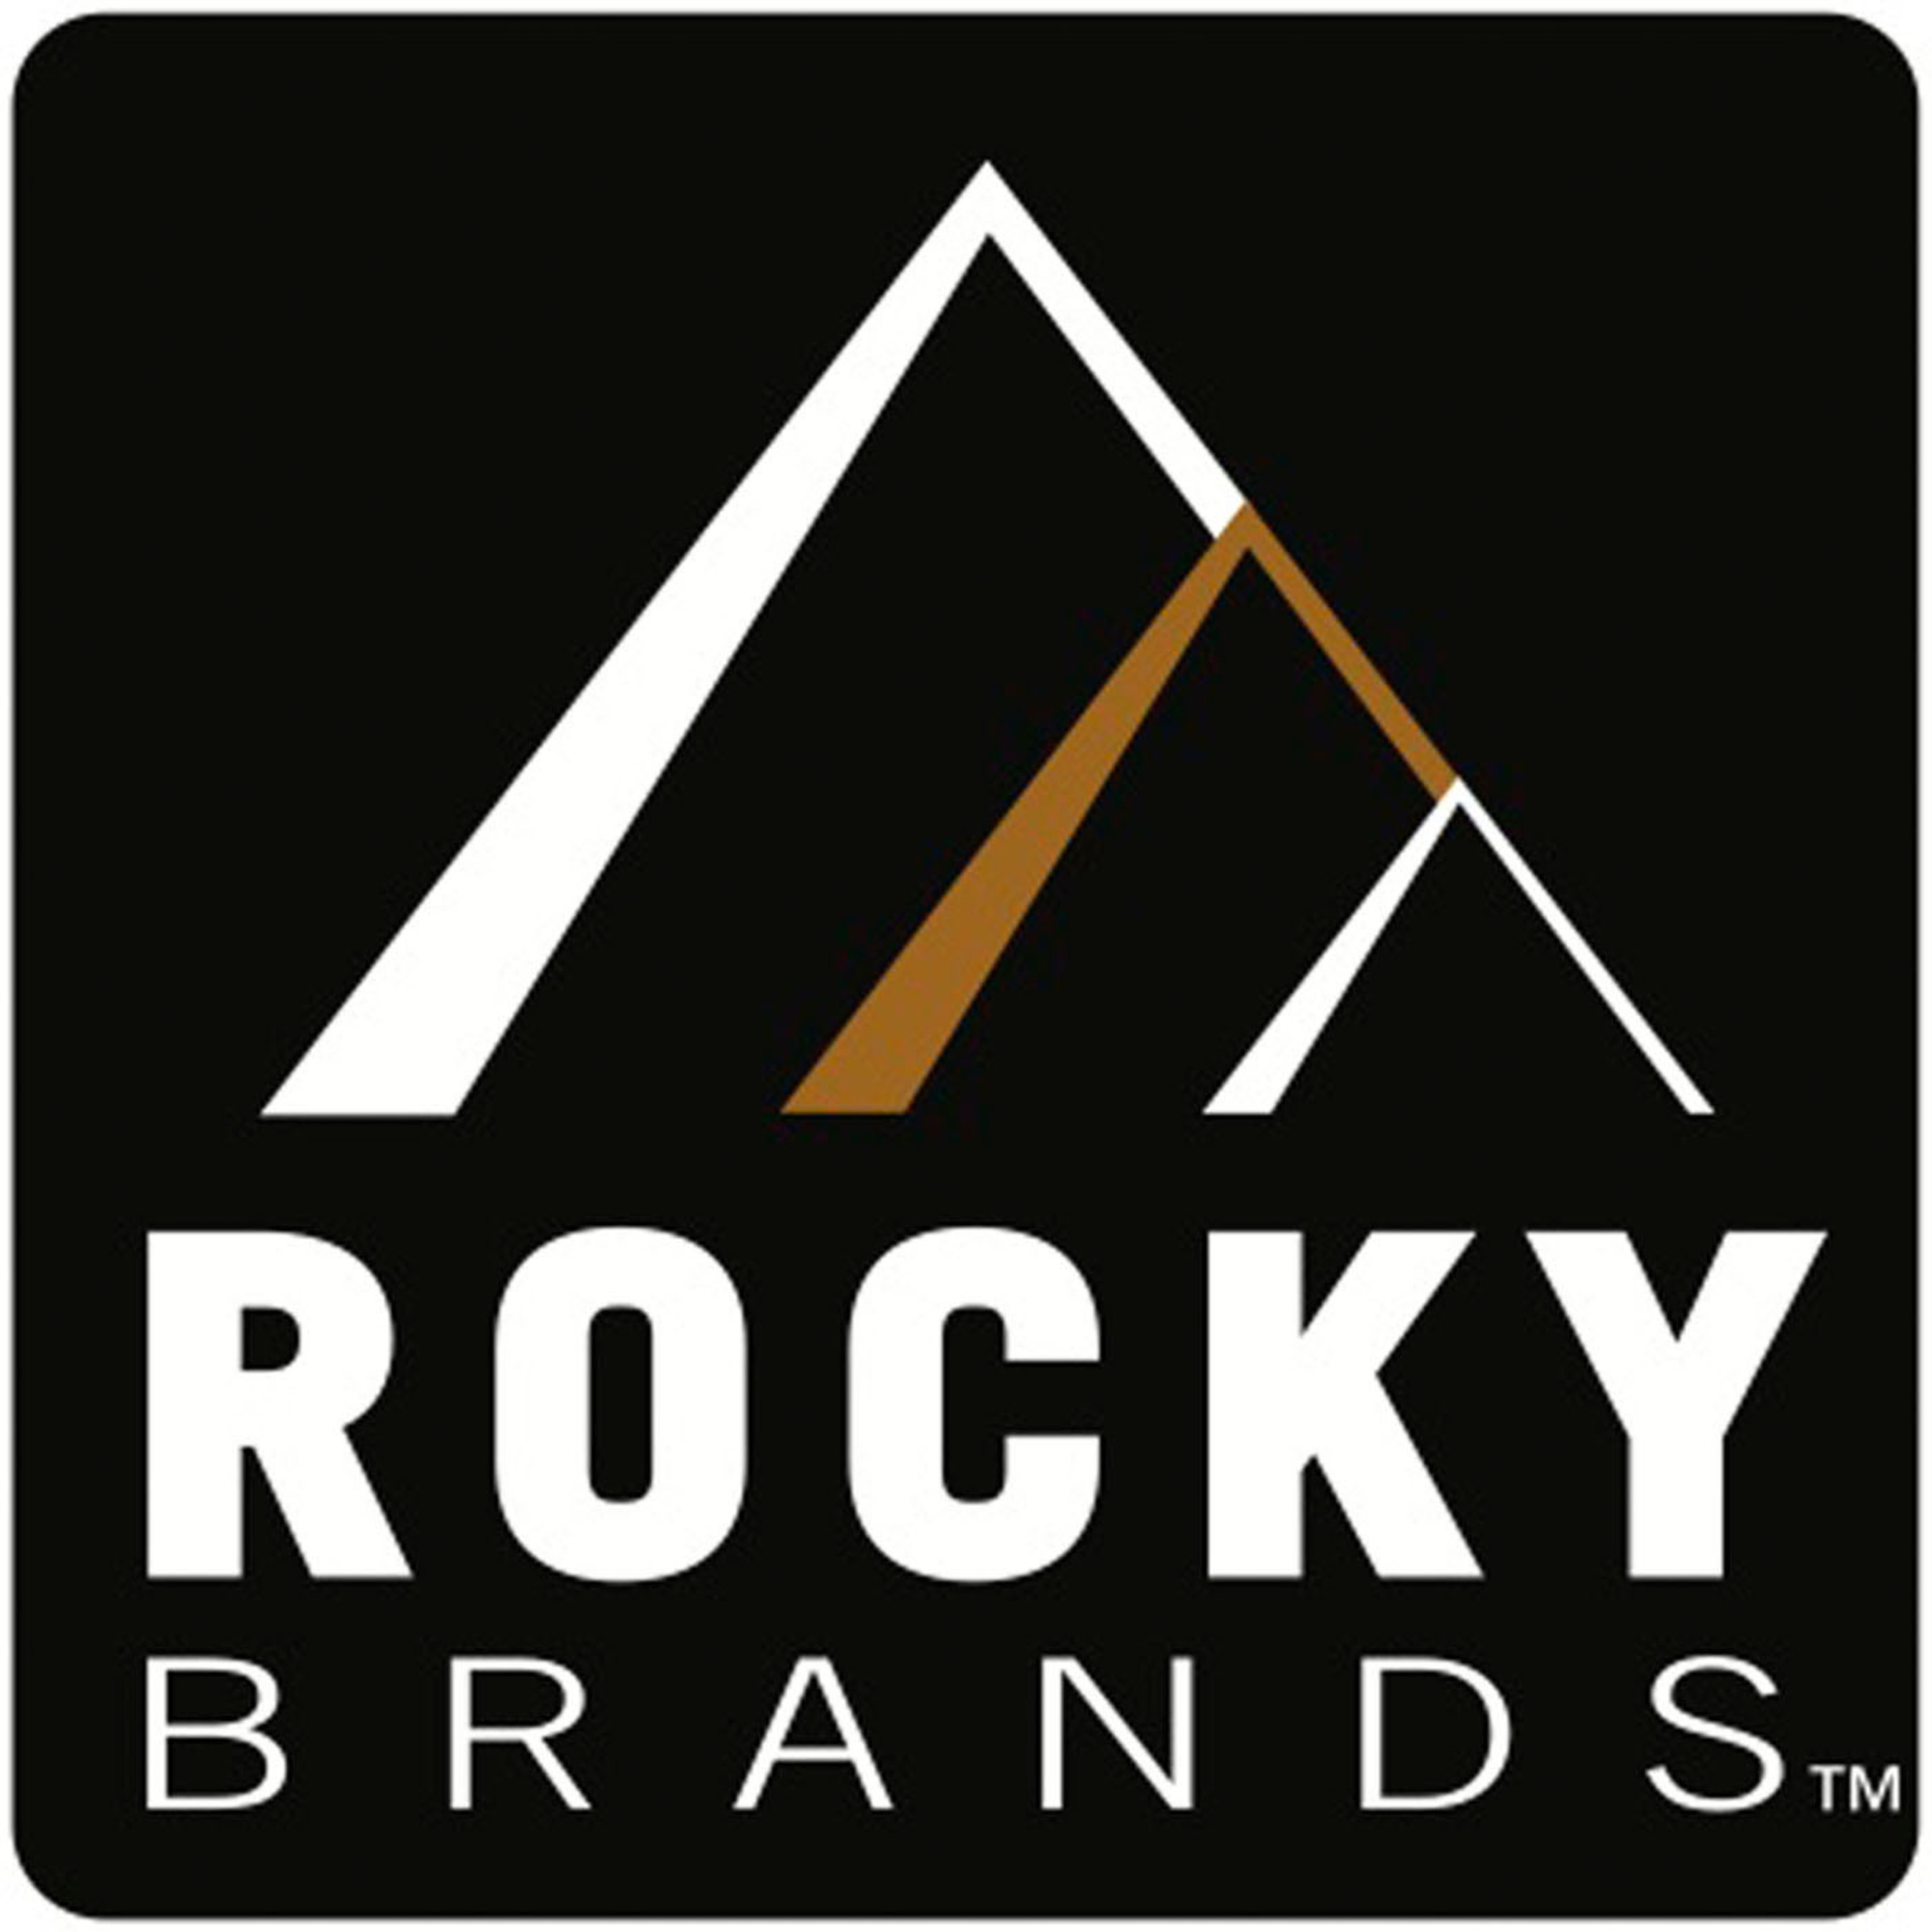 Rocky Brands, Inc. headquartered in Nelsonville, Ohio. (PRNewsFoto/Rocky Brands) (PRNewsFoto/ROCKY BRANDS)